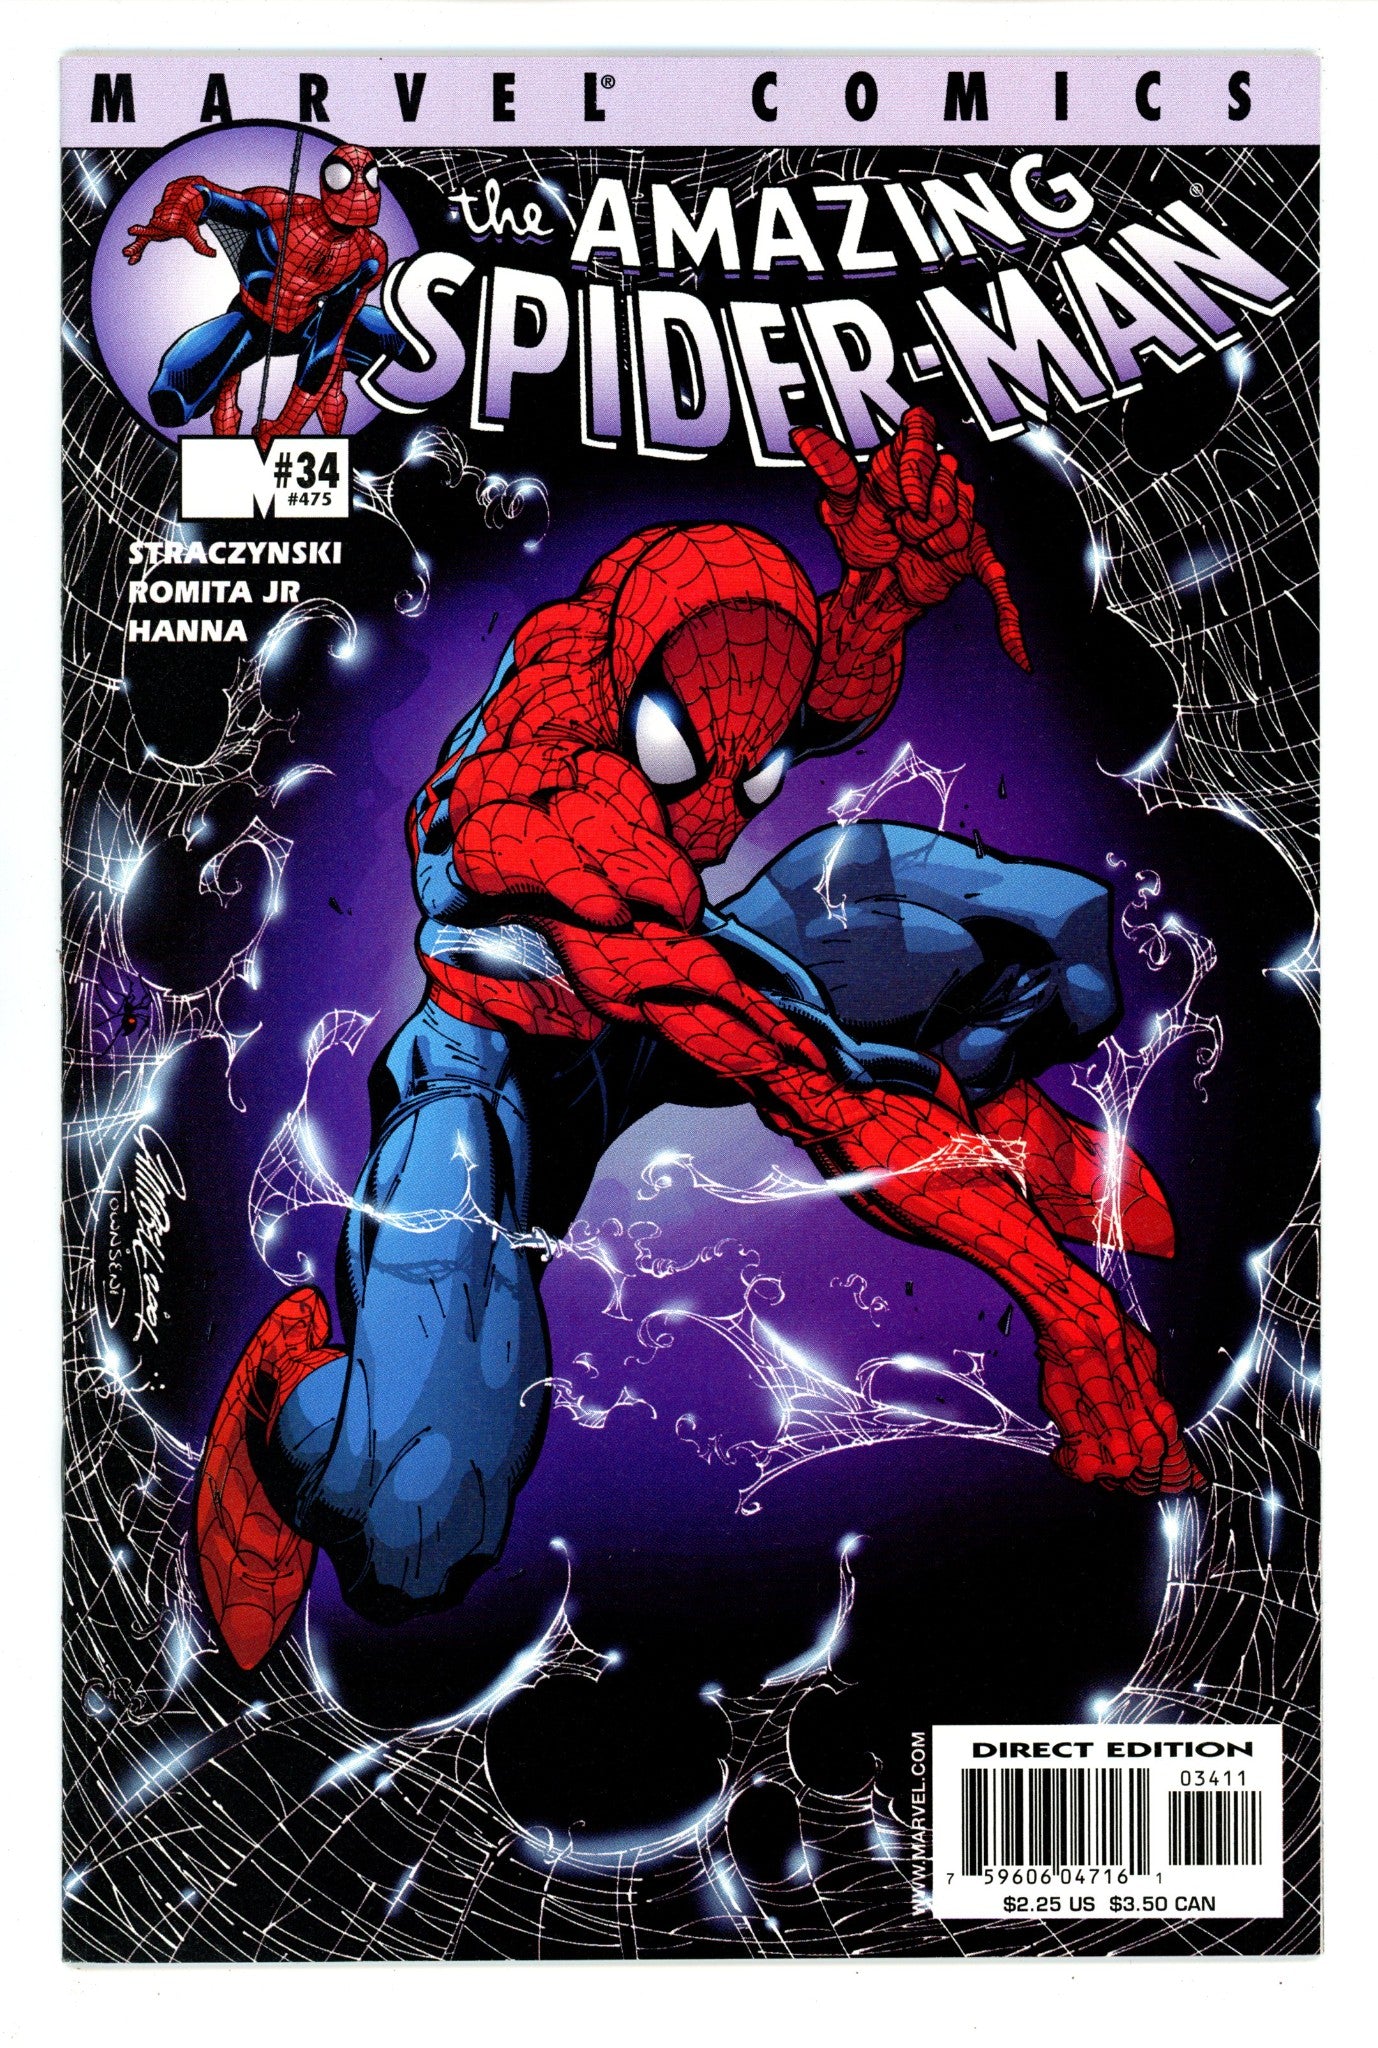 The Amazing Spider-Man Vol 2 34 (475) NM- (9.2) (2001) 